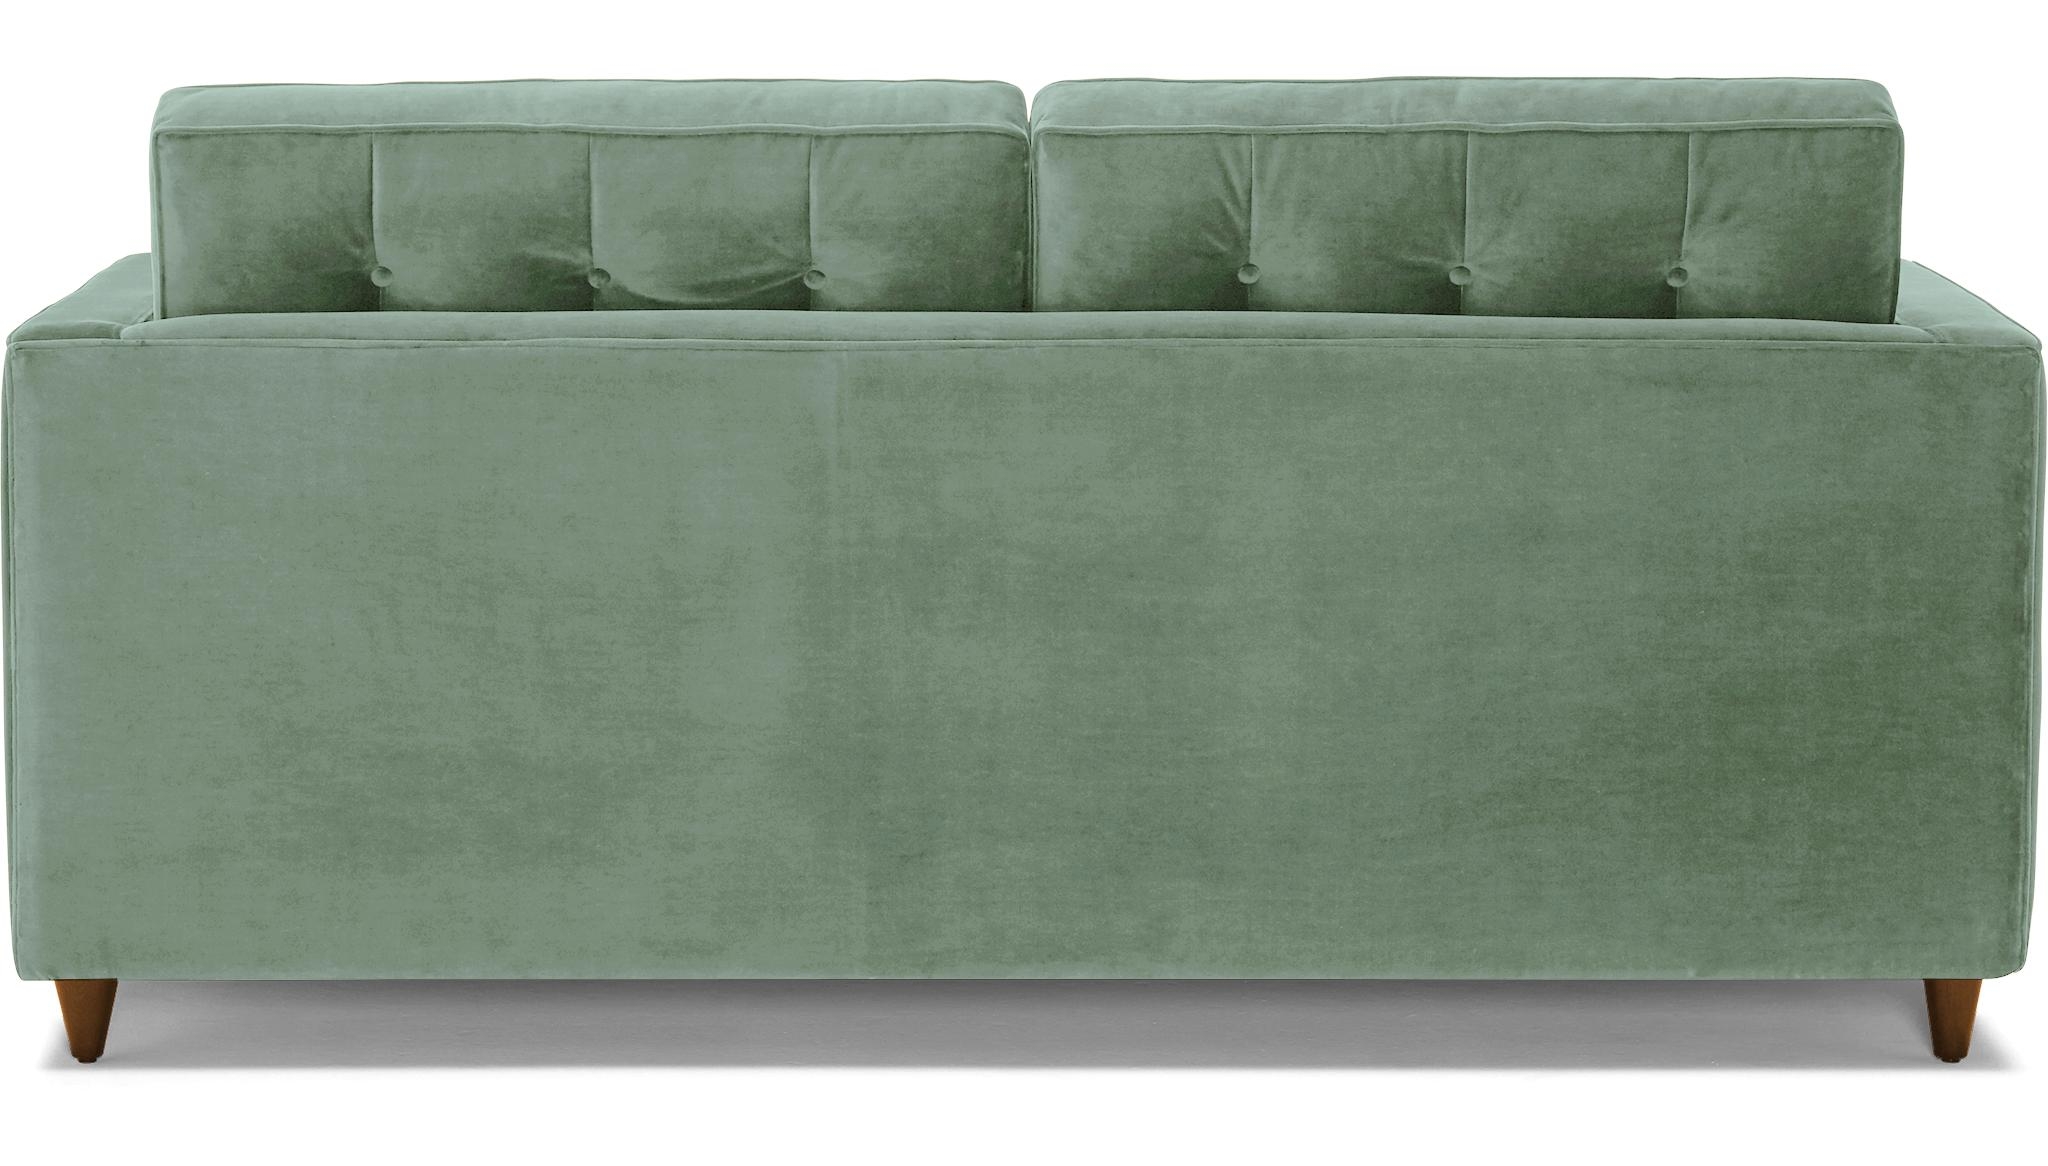 Green Braxton Mid Century Modern Sleeper Sofa - Essence Aqua - Mocha - Image 4